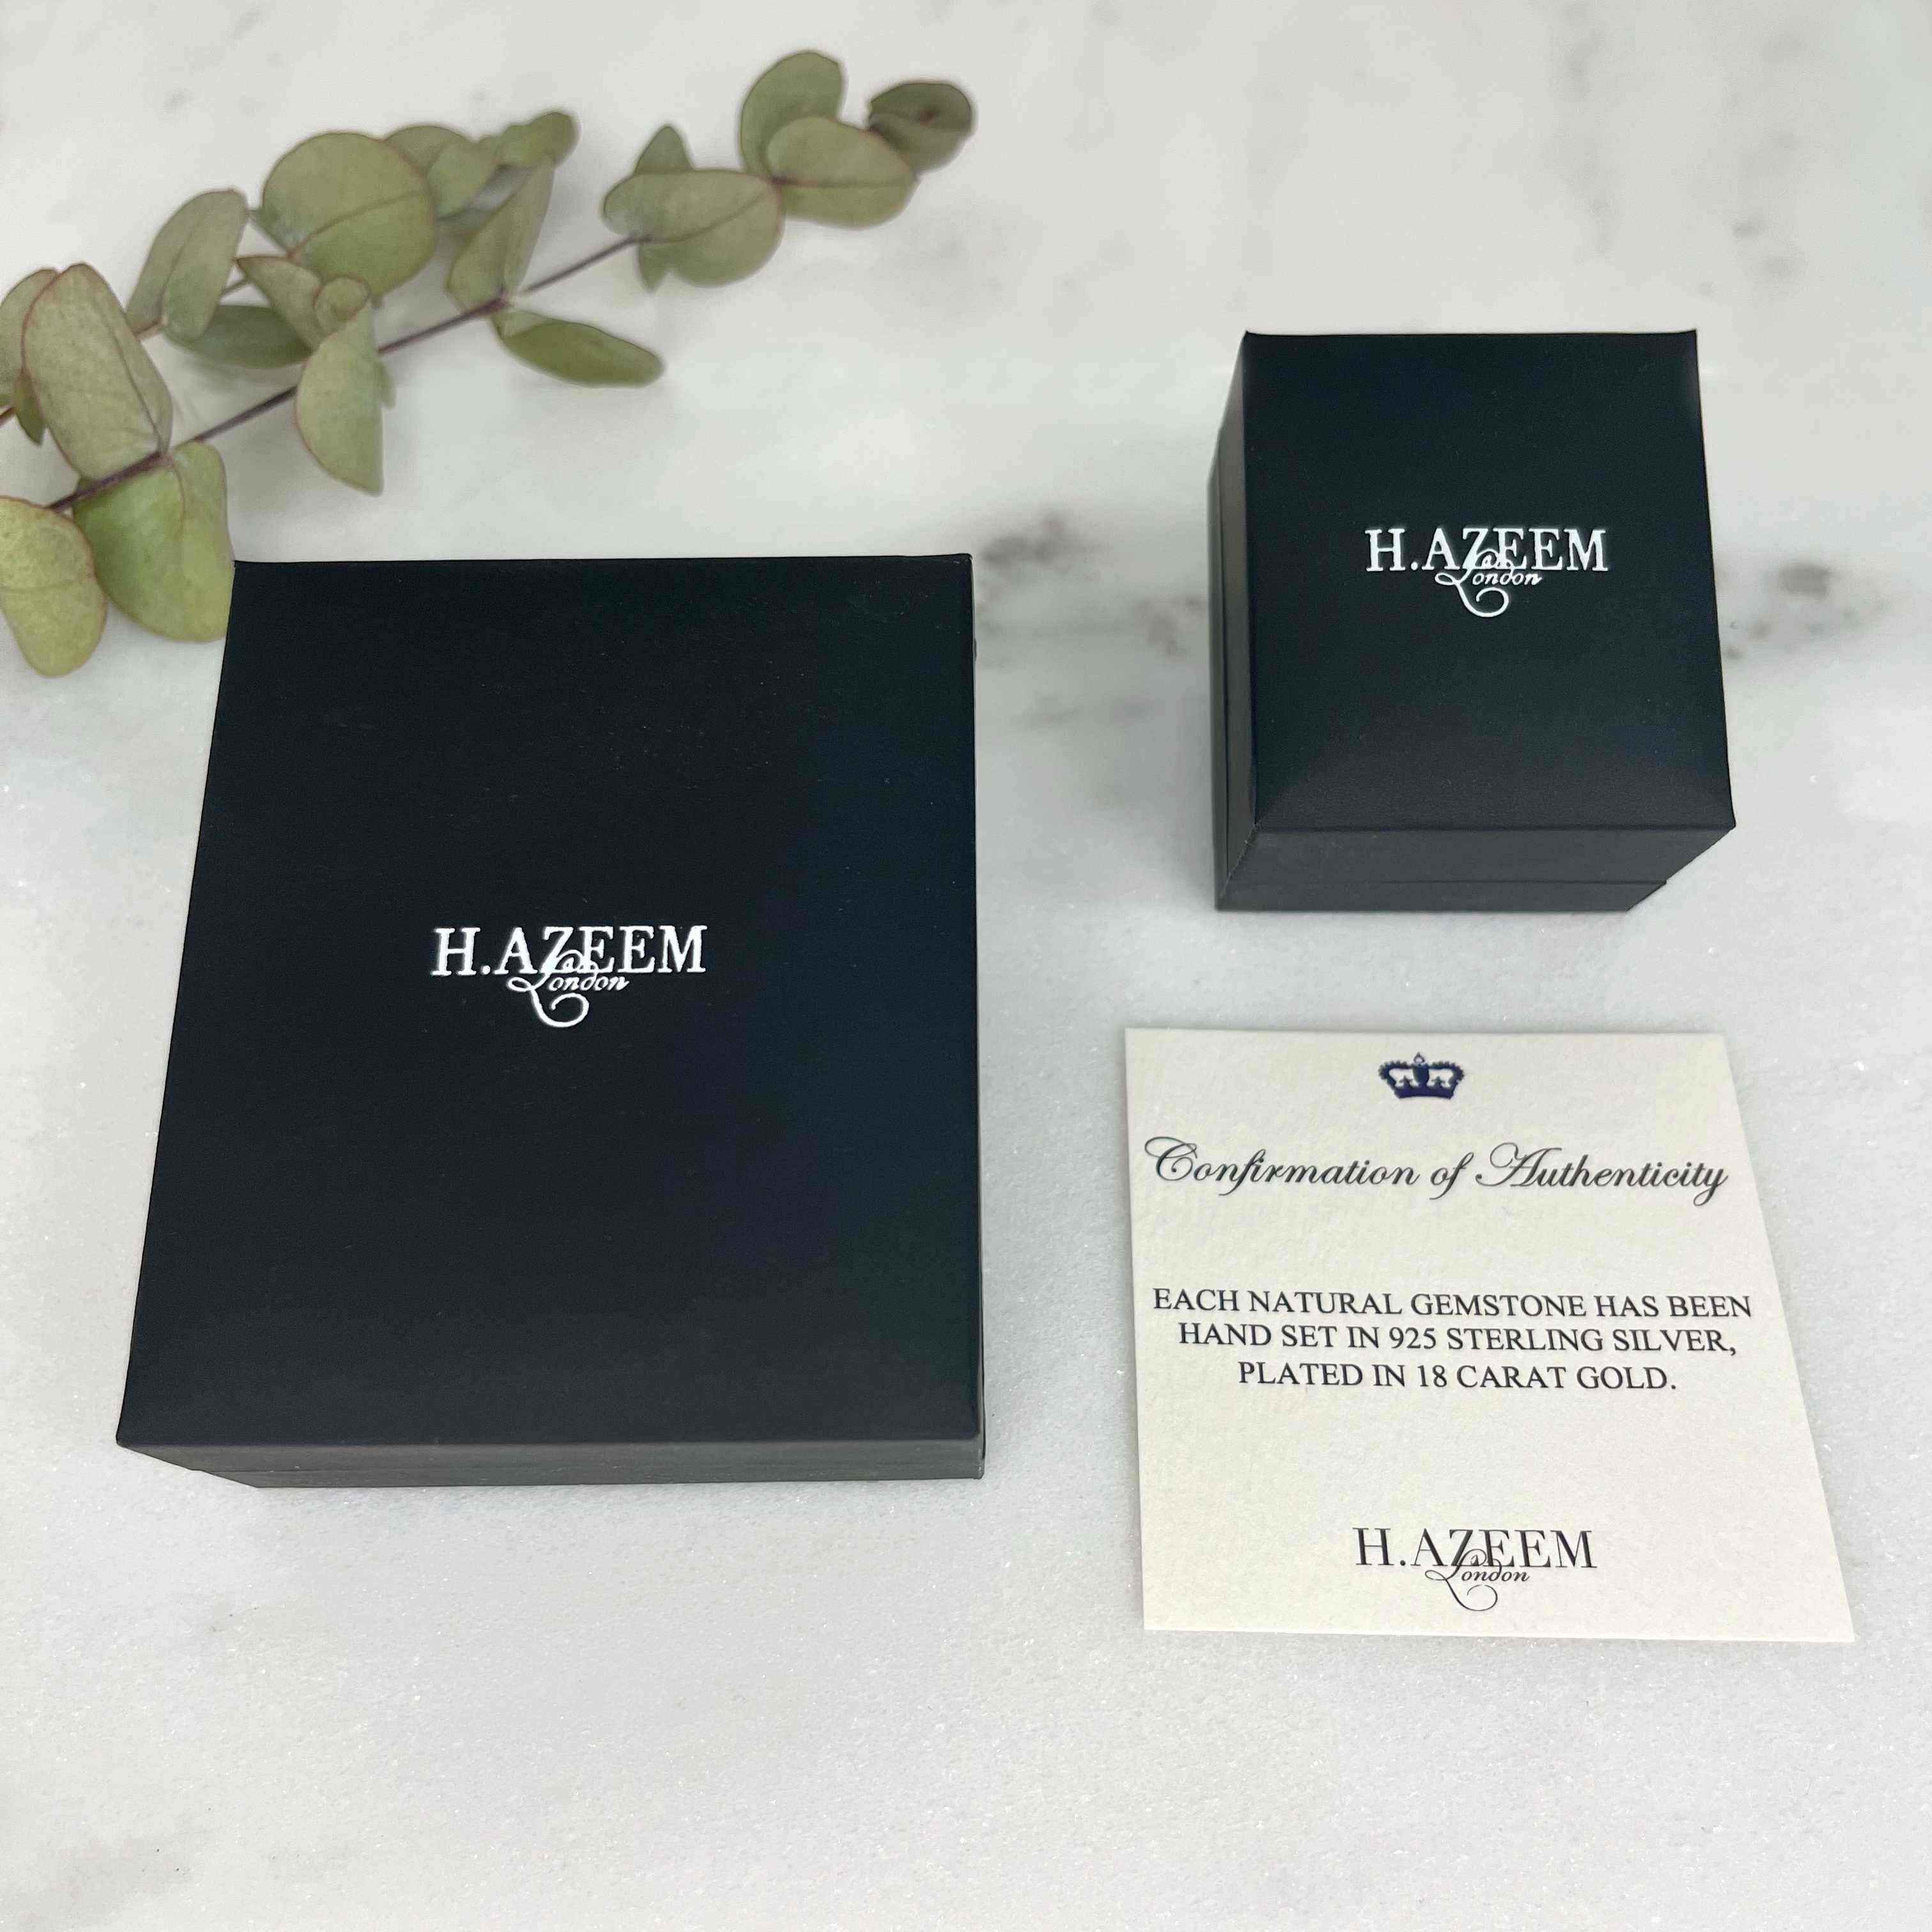 Jewellery box and warranty card - H.AZEEM London